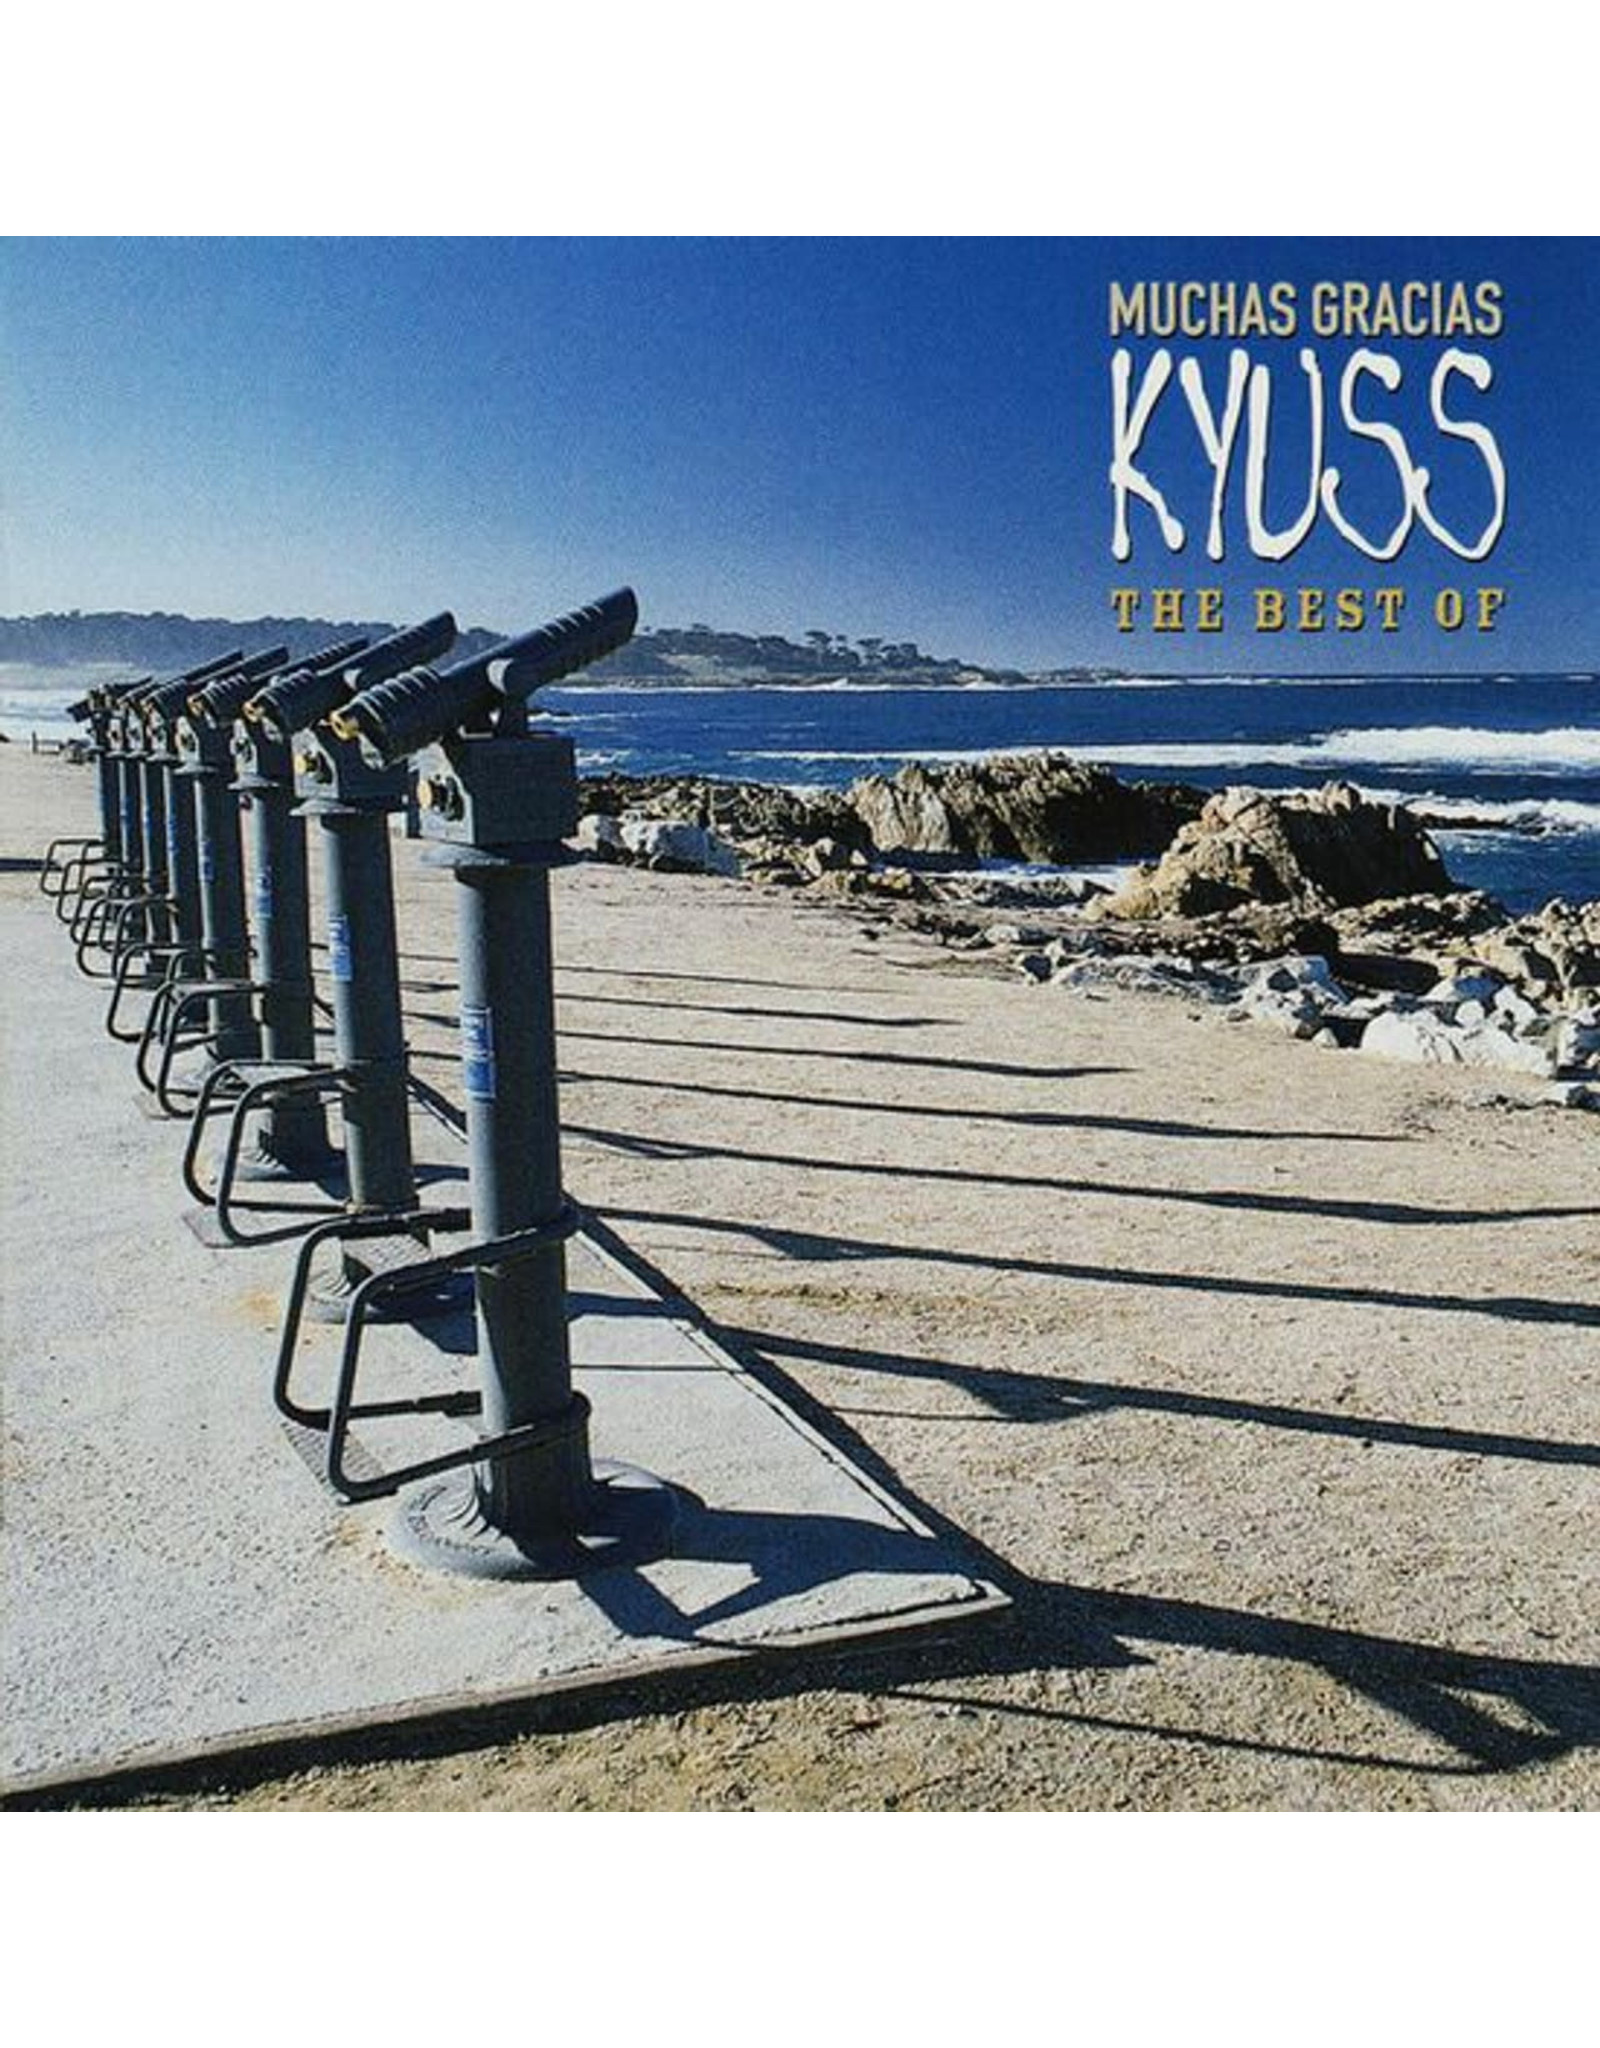 Run Out Groove Kyuss: Muchas Gracias: The Best of Kyuss LP